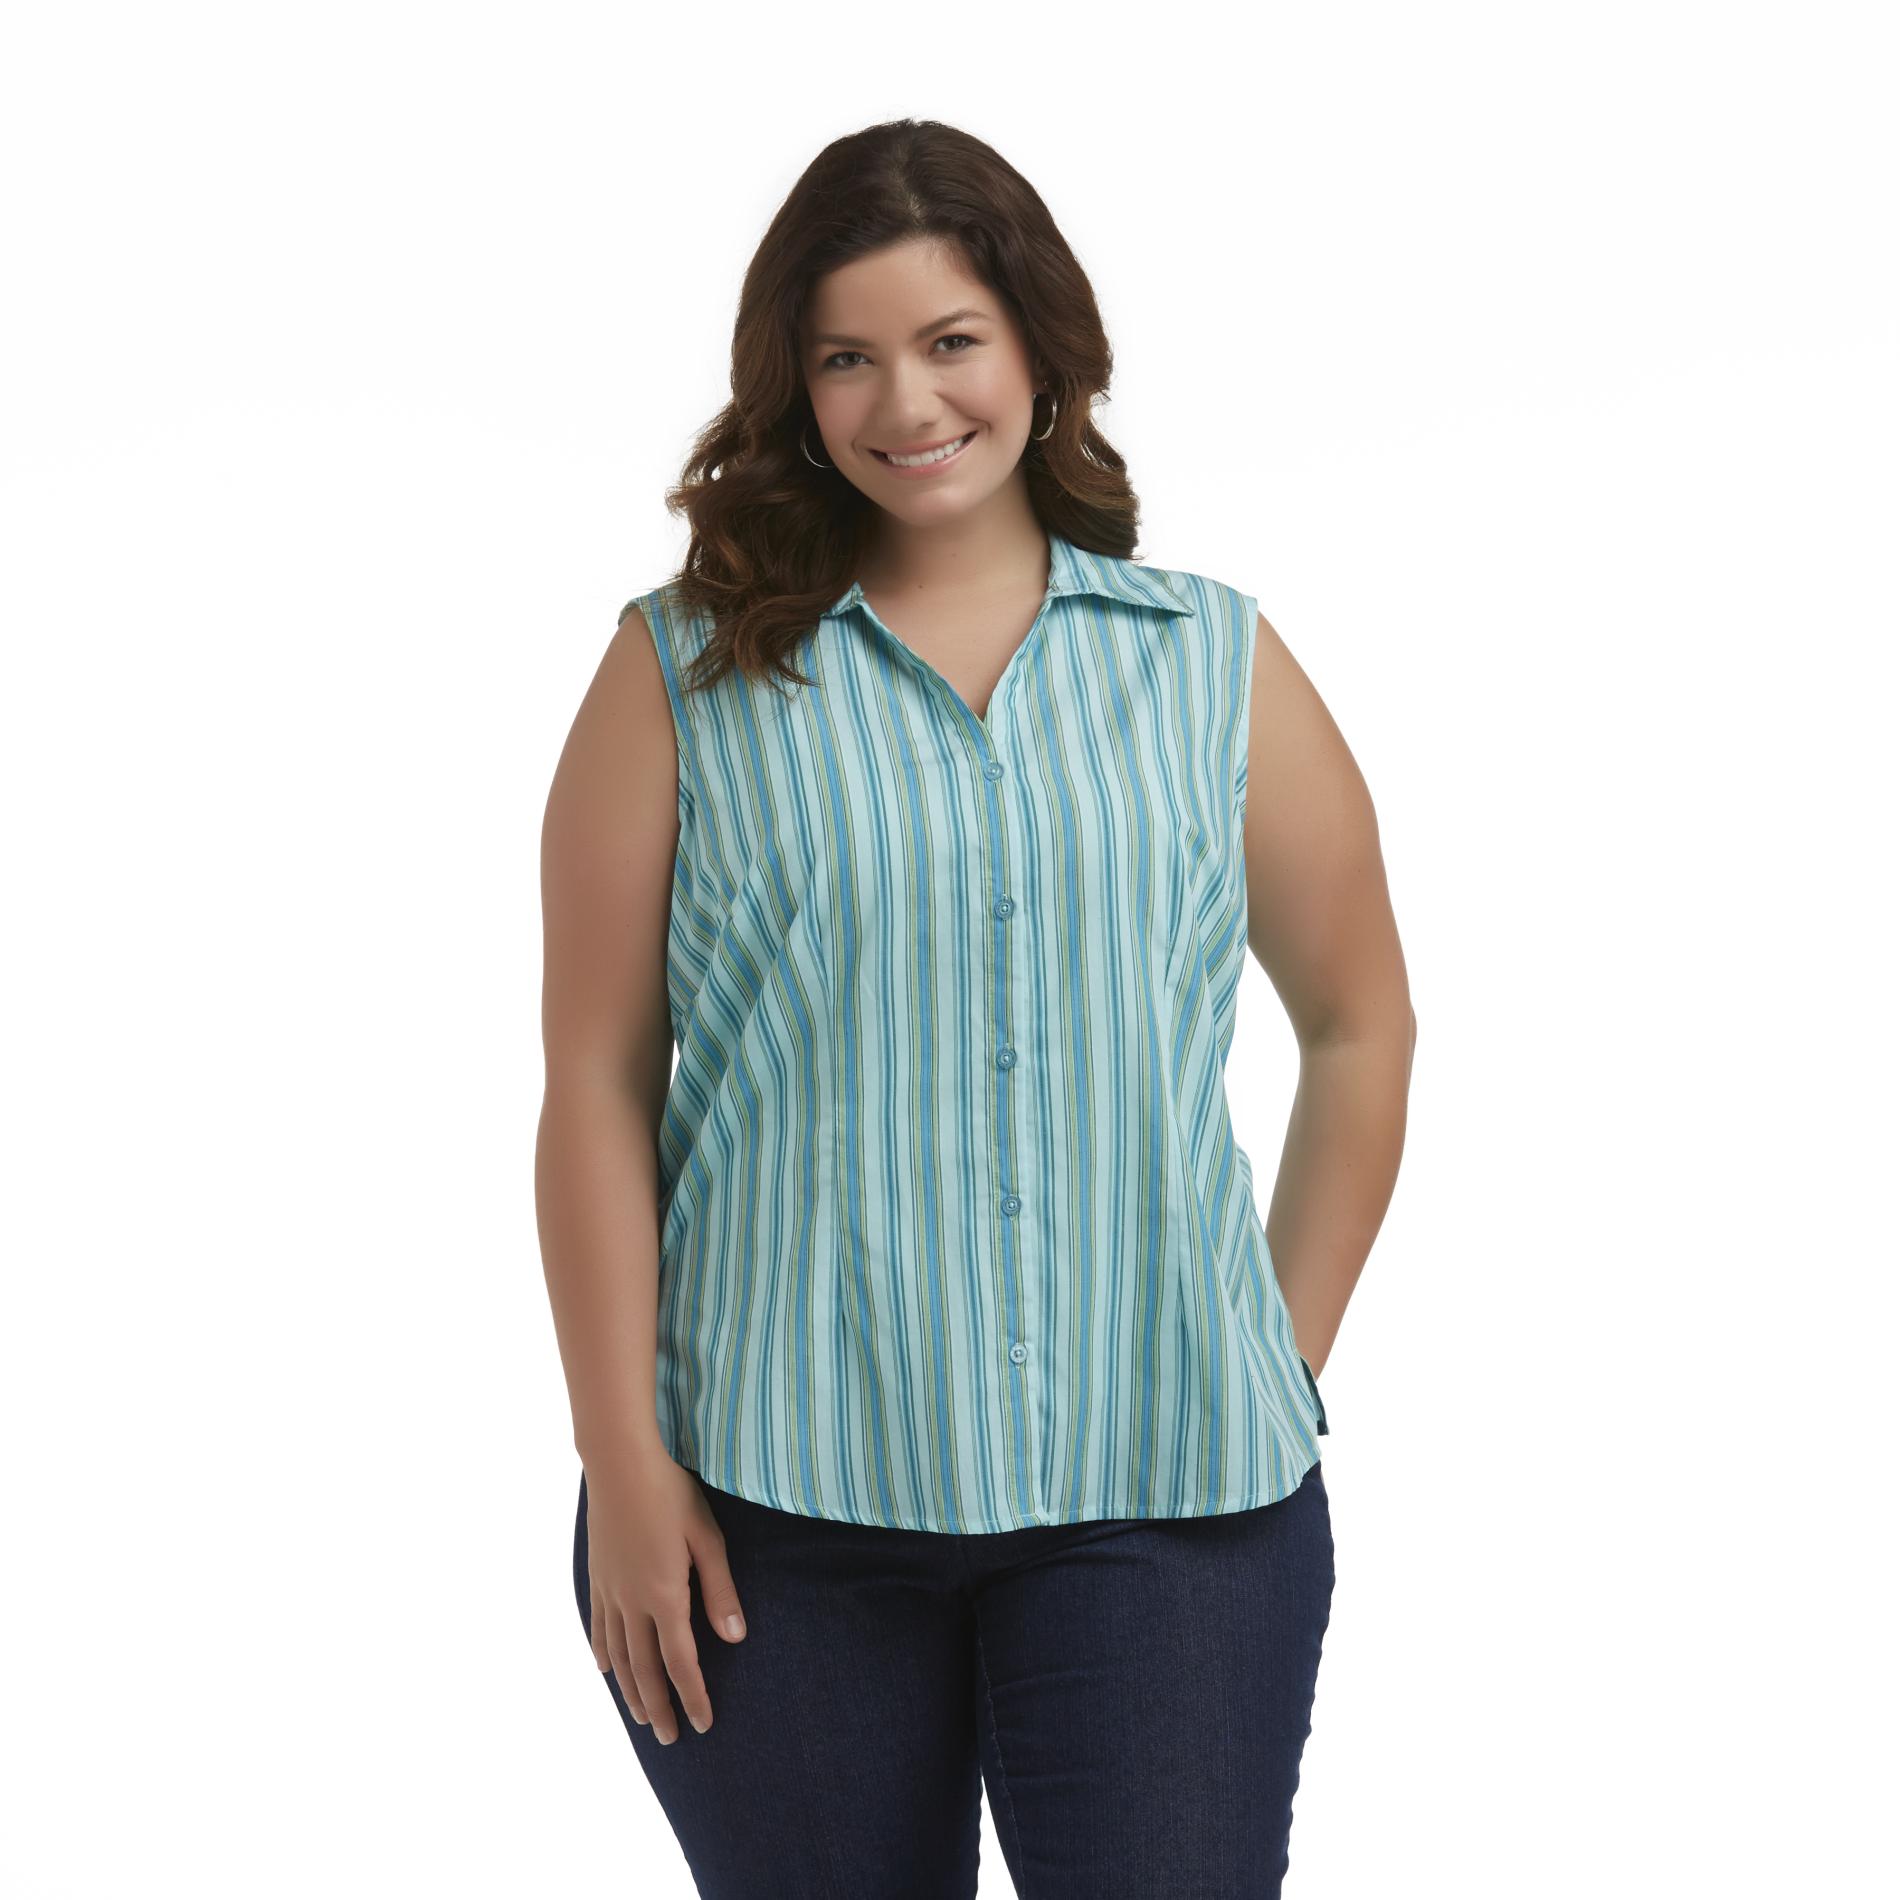 Basic Editions Women's Plus Sleeveless Camp Shirt - Striped